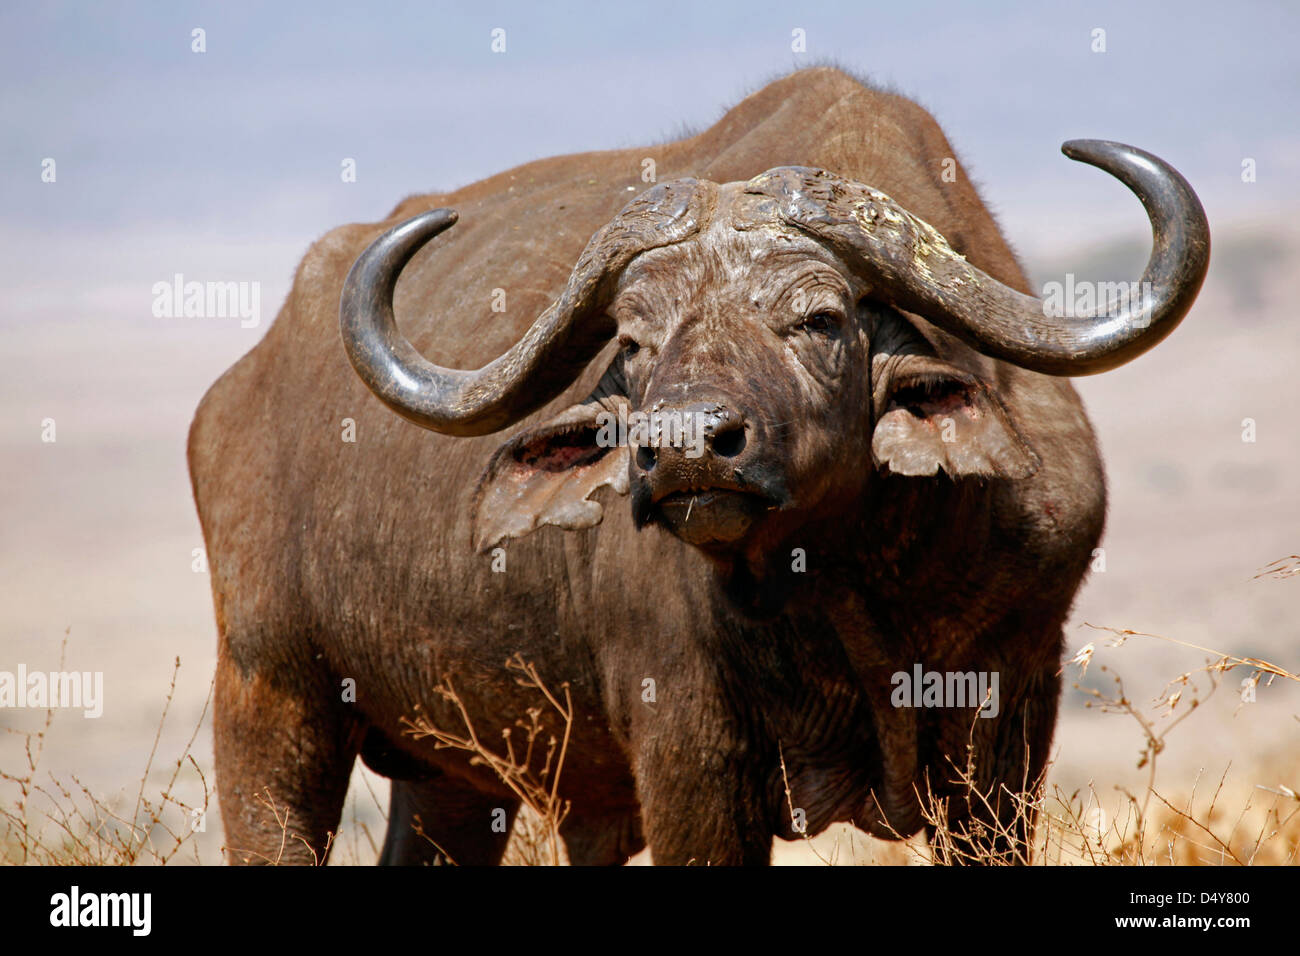 Tanzania, Ngorongoro Crater. African Buffalo. Stock Photo